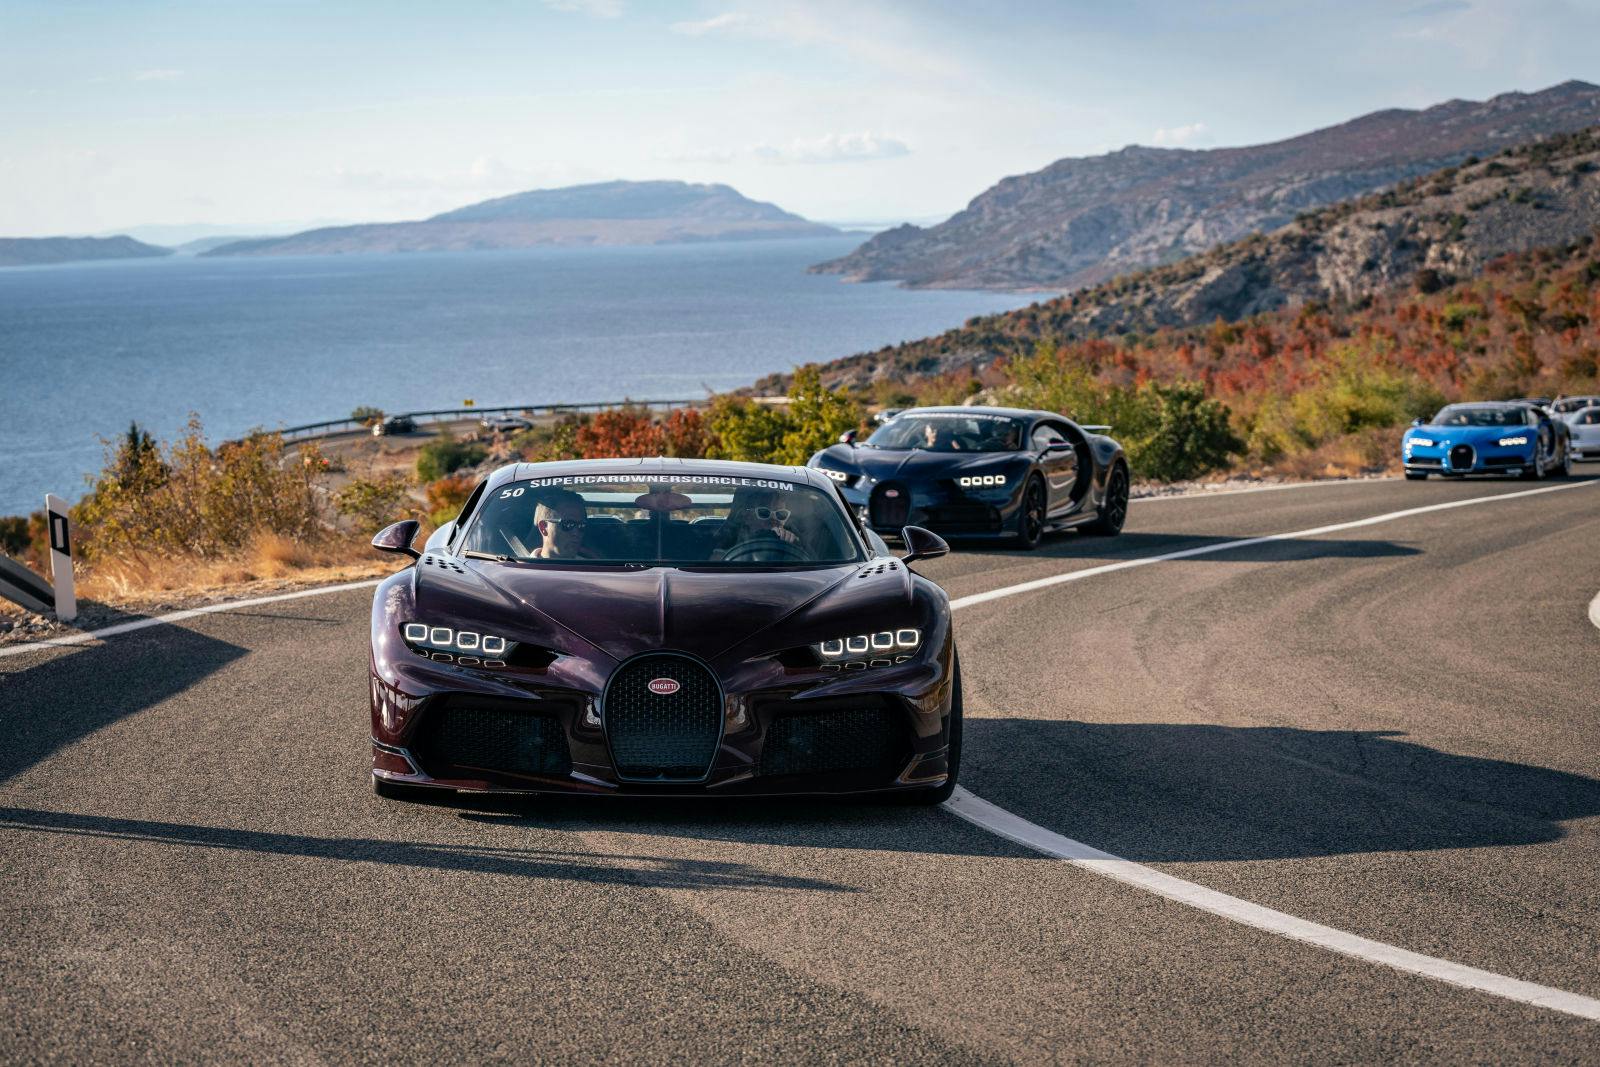 Bugatti models travelled the beautiful Adriatic coastline, including the famous Magistrala road.